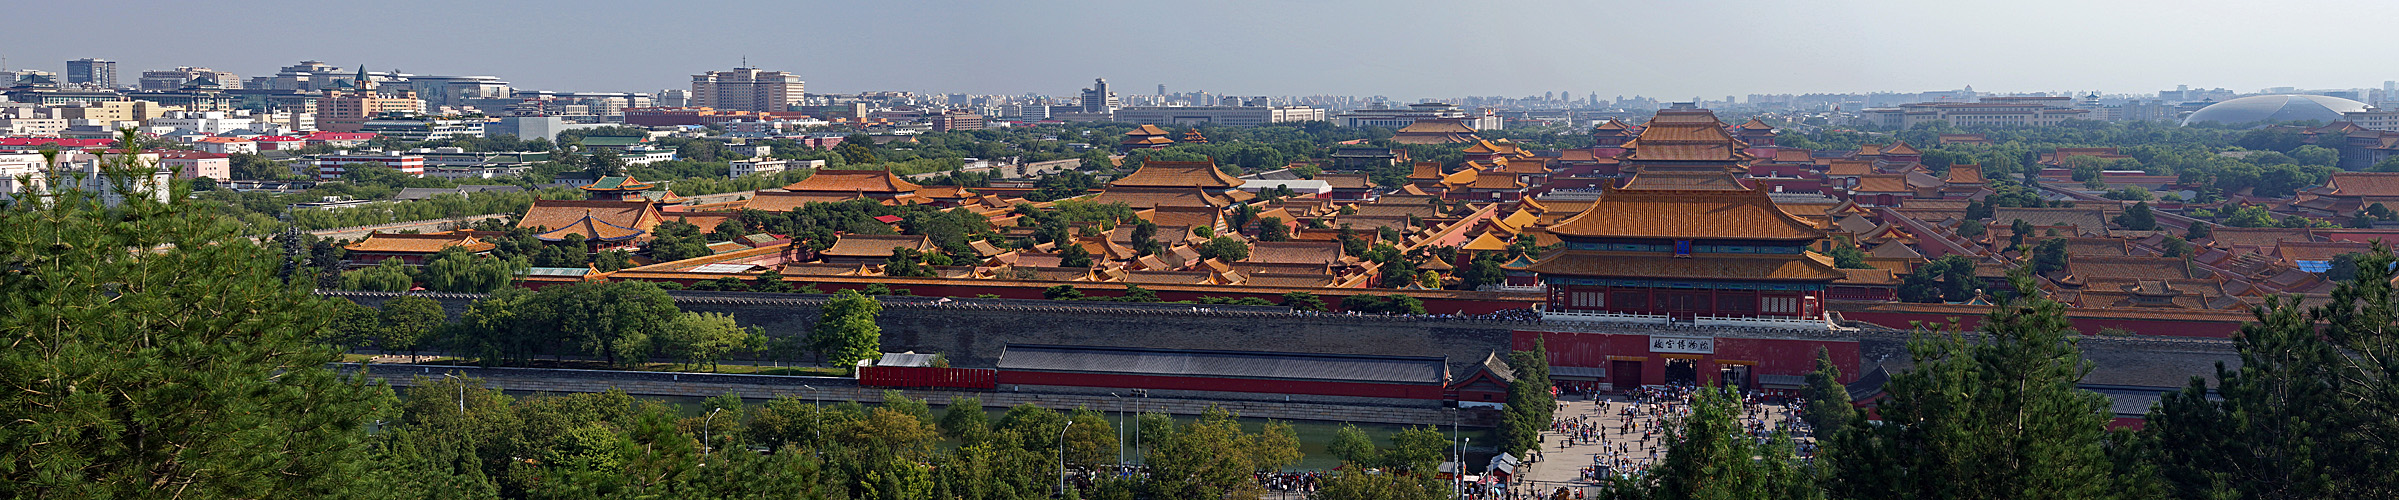 CHINE - photo panoramique de la Cité Interdite